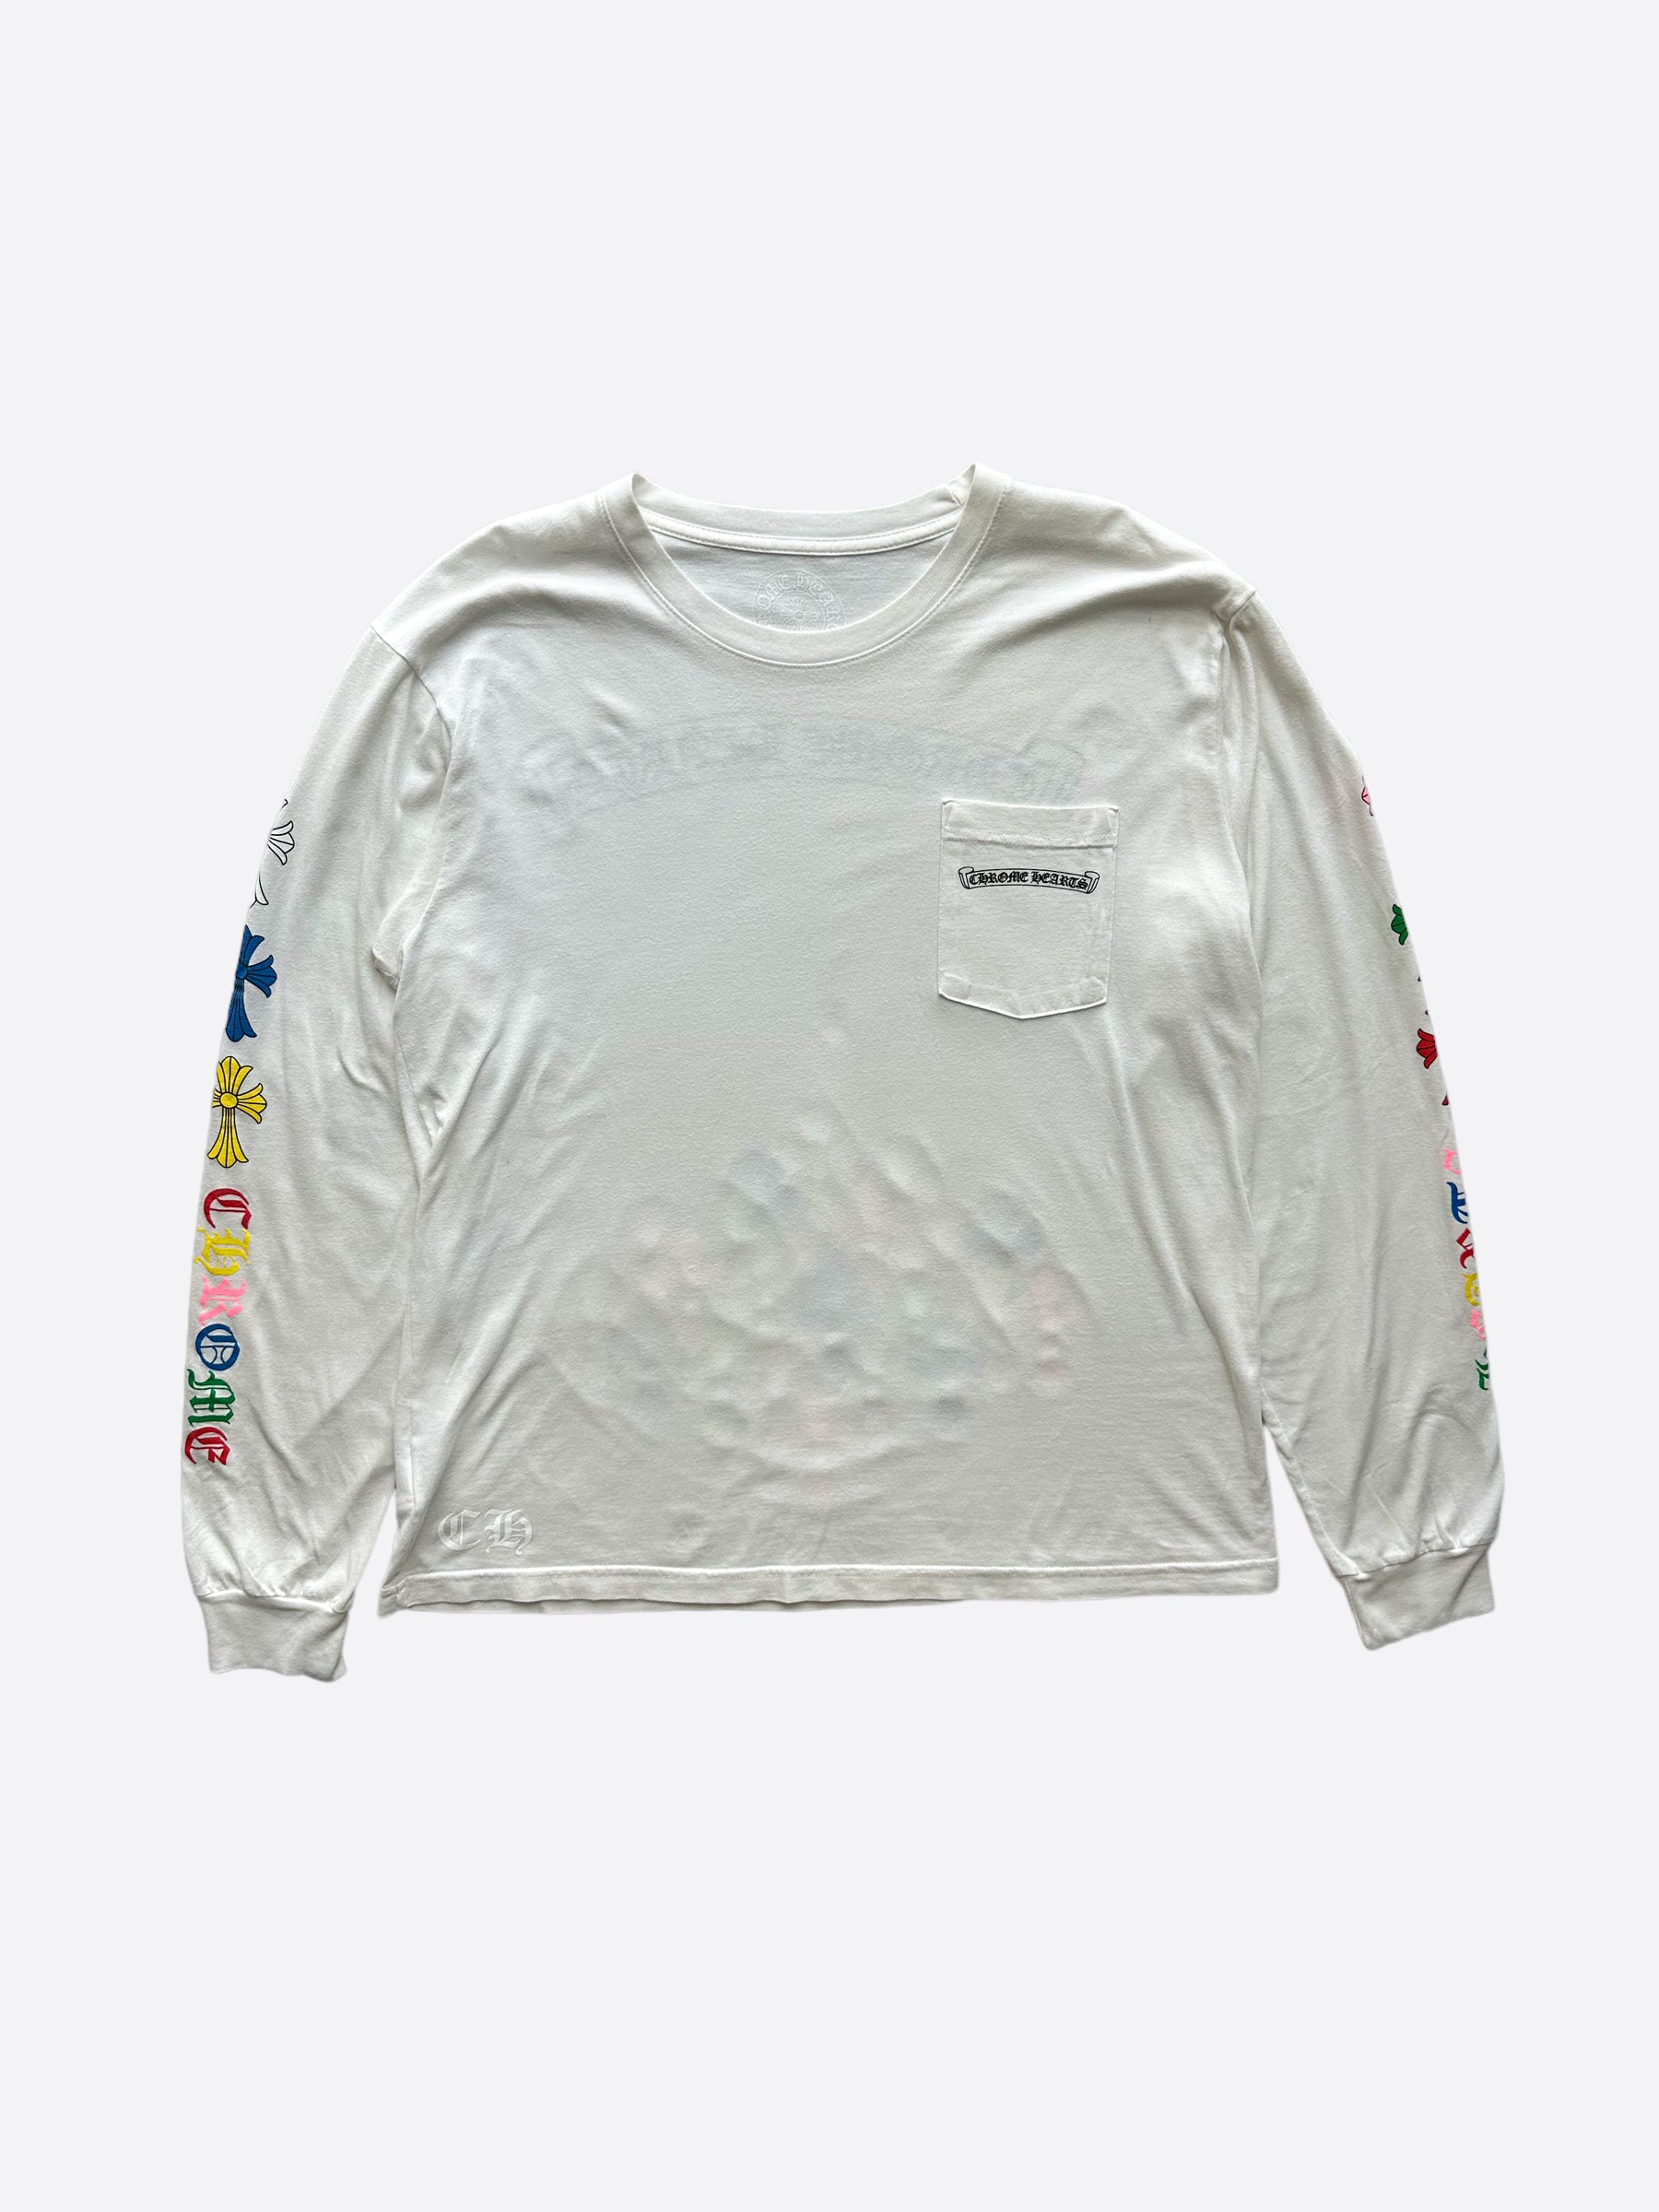 Chrome Hearts White Multicolor Cross Longsleeve T-Shirt